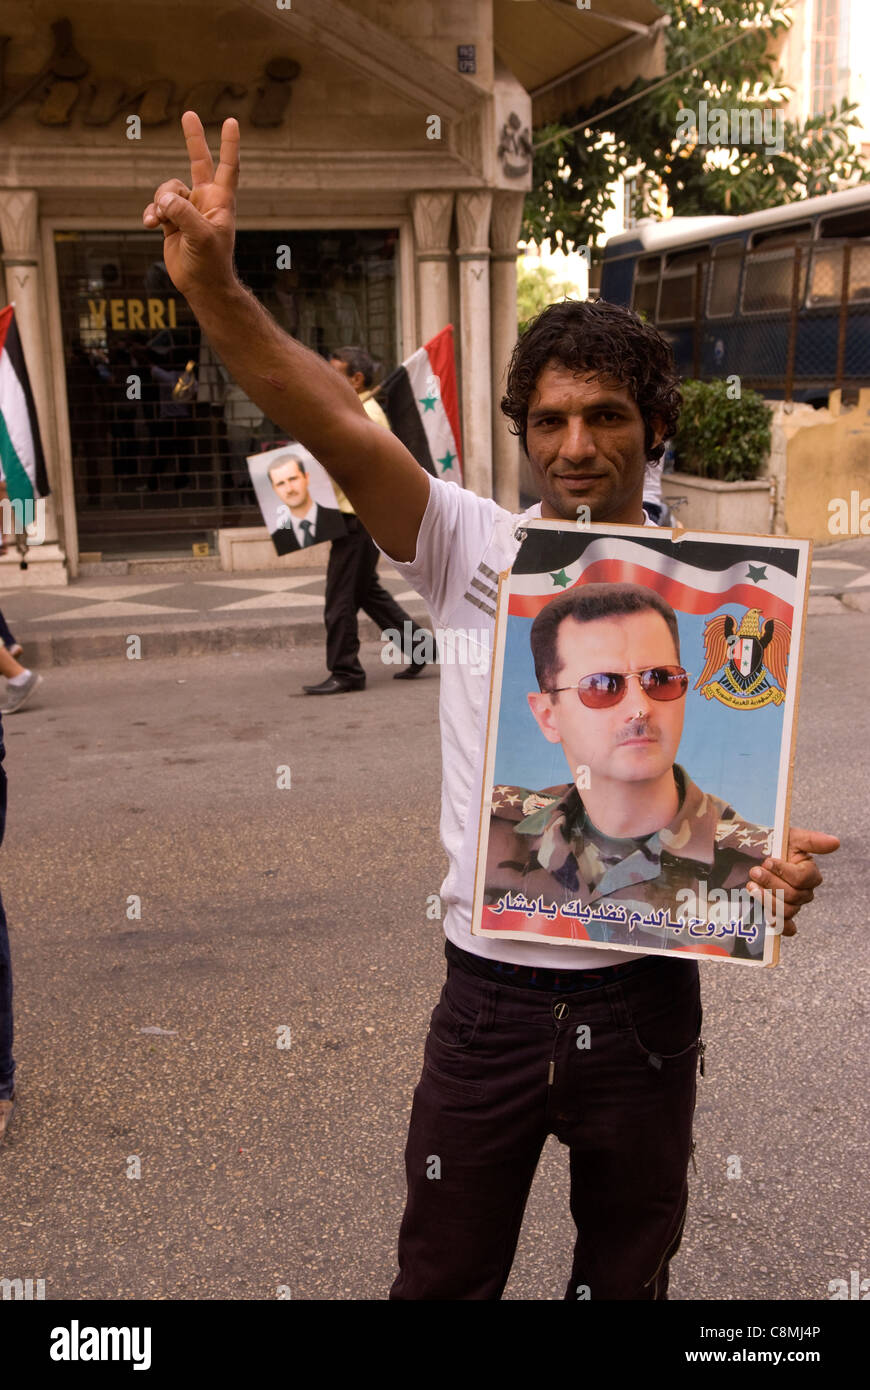 Supporter of the Syrian regime of Bashar Al-Assad during a demonstration in Hamra, west Beirut, Lebanon on 23.10.2011. Stock Photo